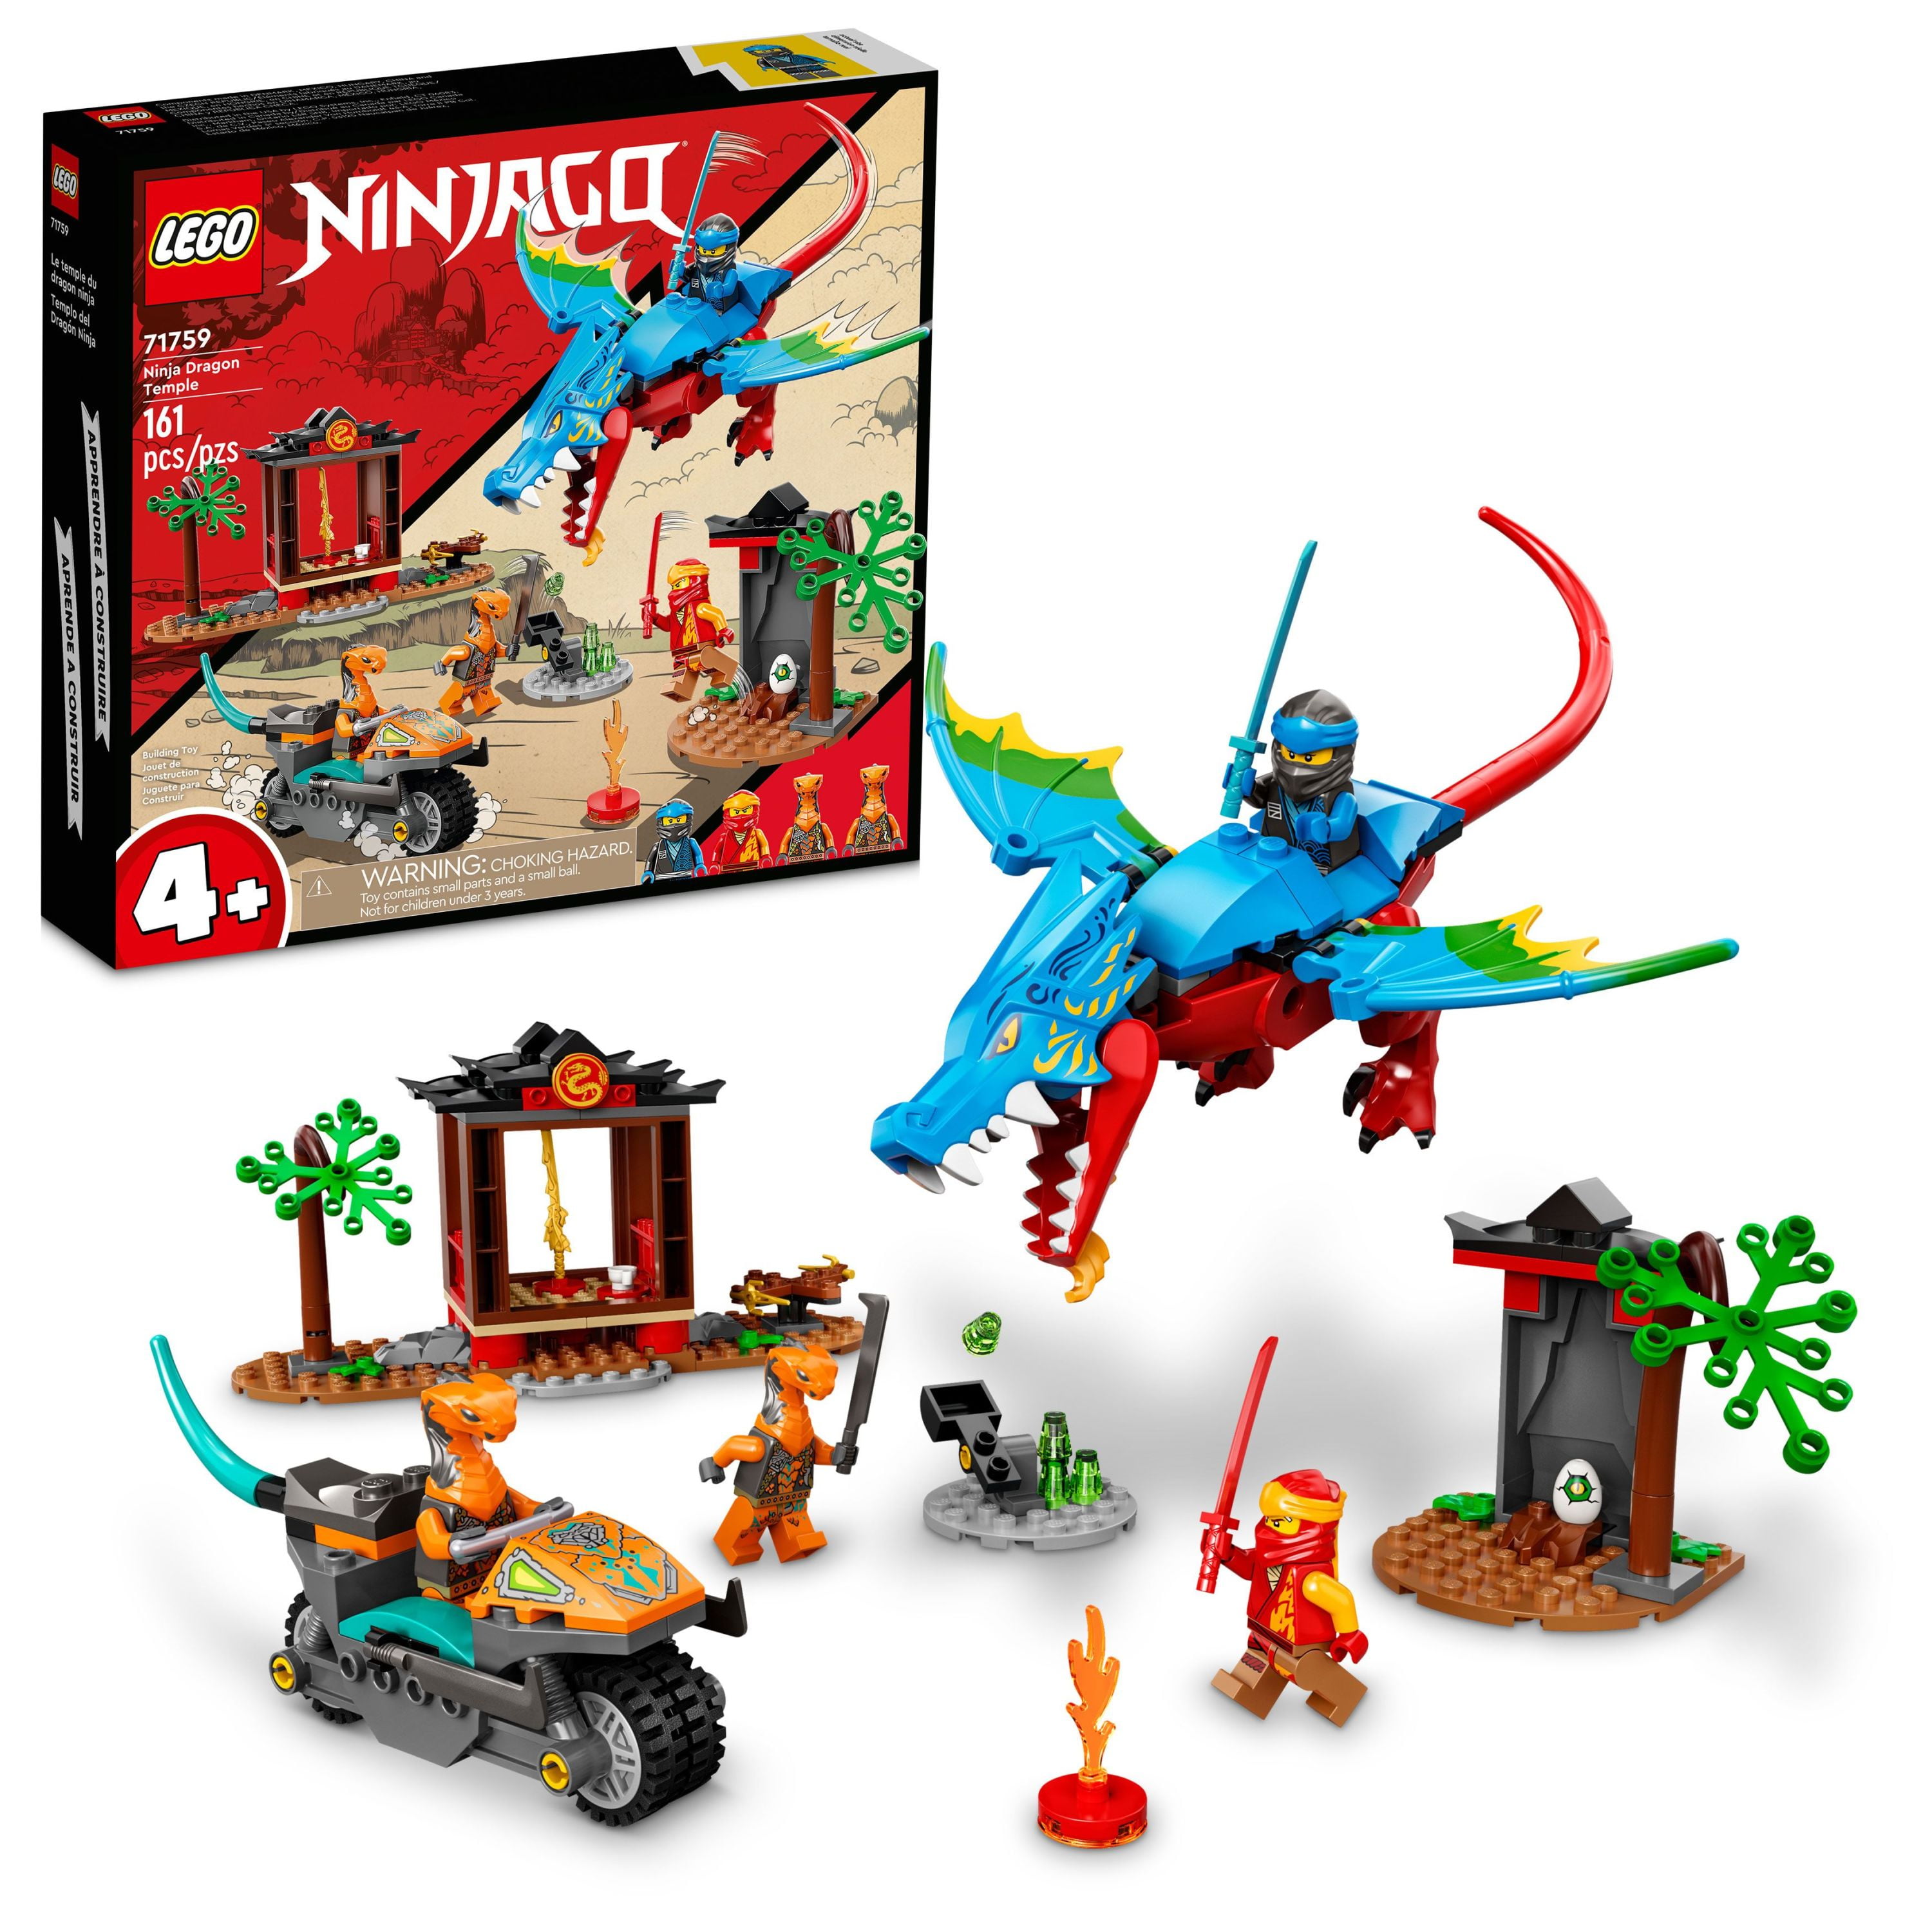 LEGO NINJAGO Ninja Dragon Temple 71759 Building Set (161 Pieces)